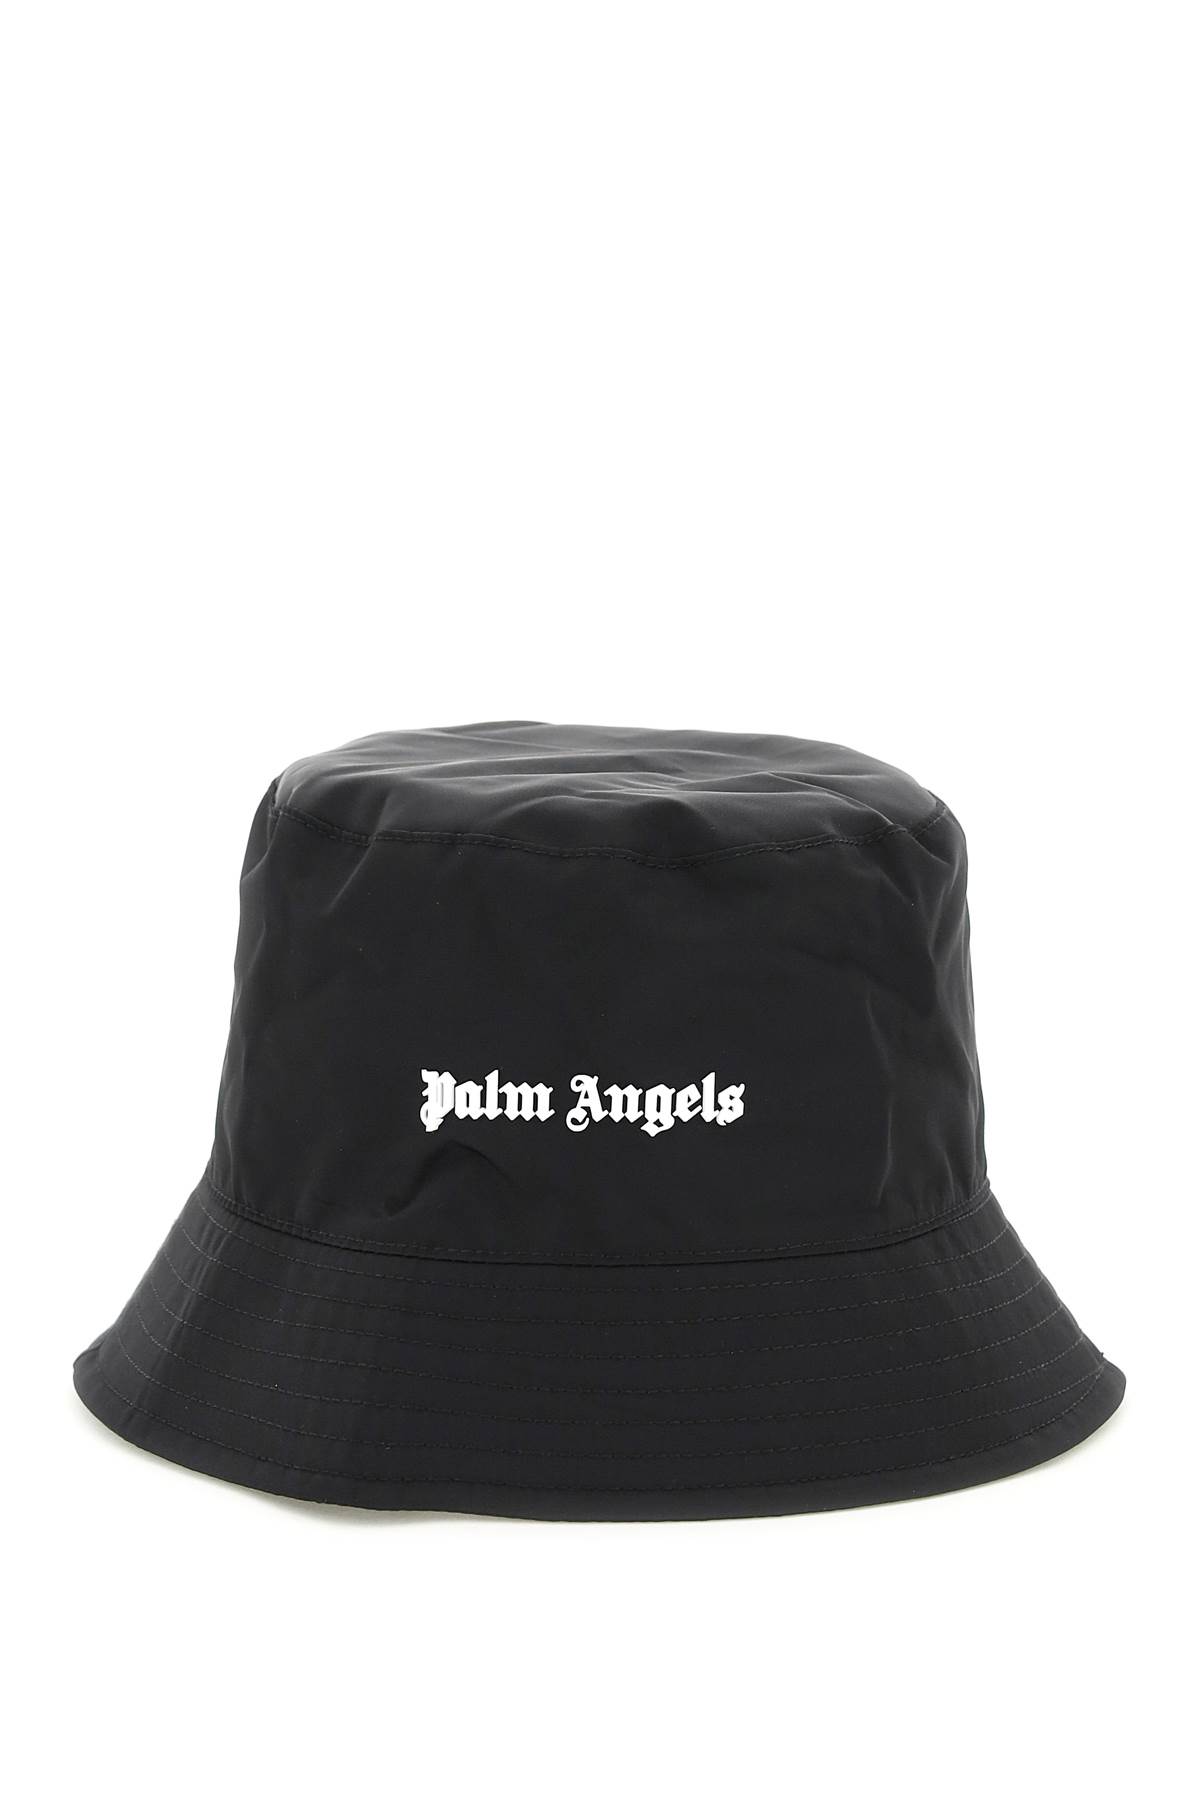 Palm Angels Bucket Hat